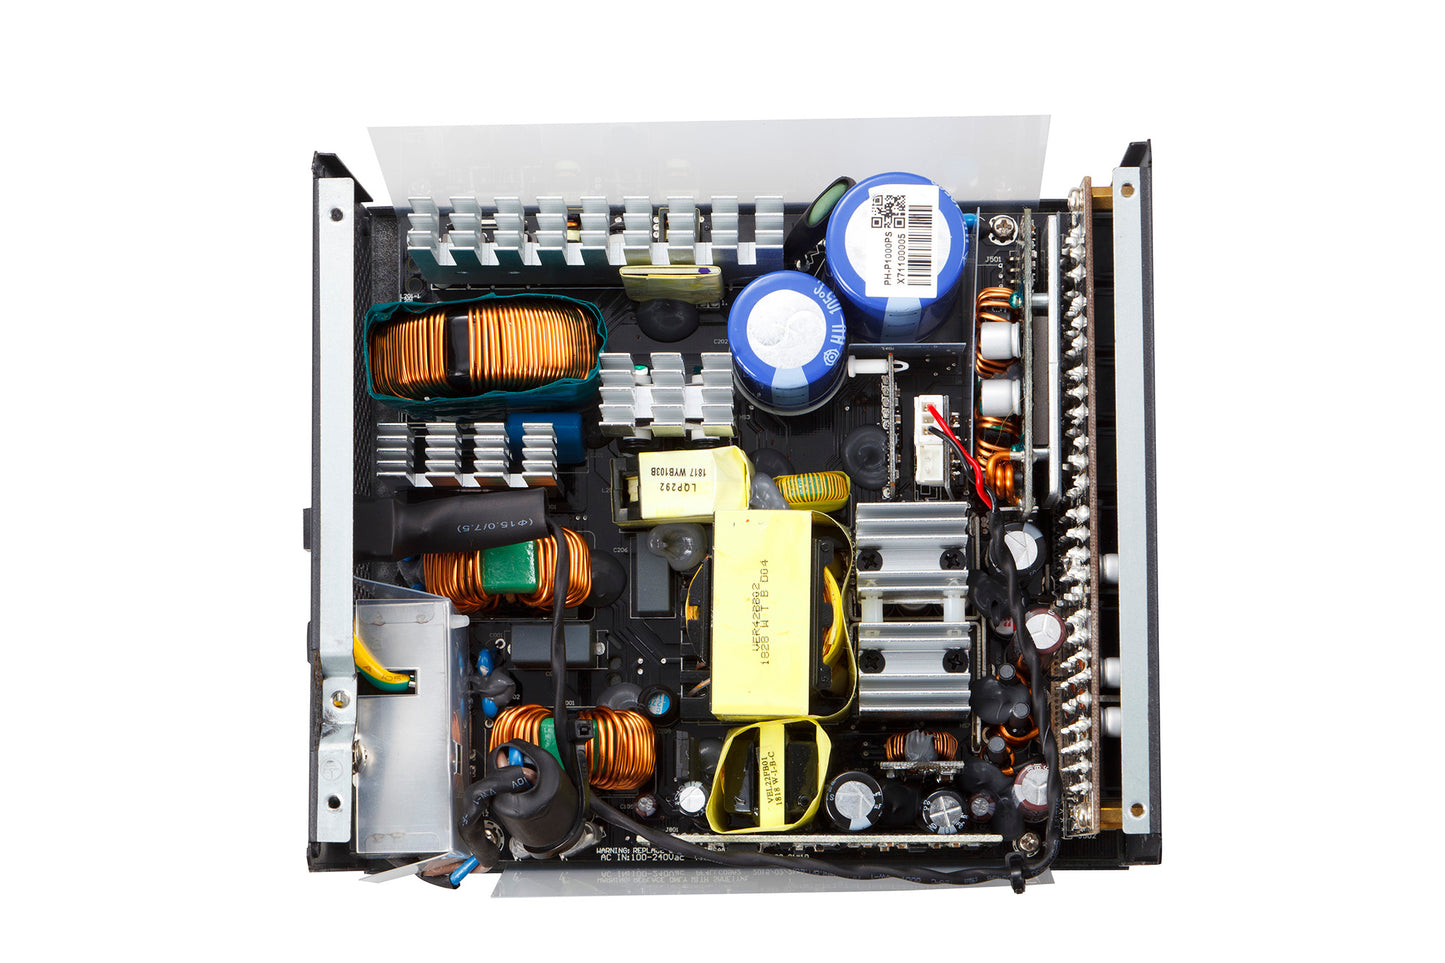 Phanteks 80+ Platinum - Built-in Power Splitter 1200W Fully Modular Design Dual System Support Power Supply (PH-P1200PS)